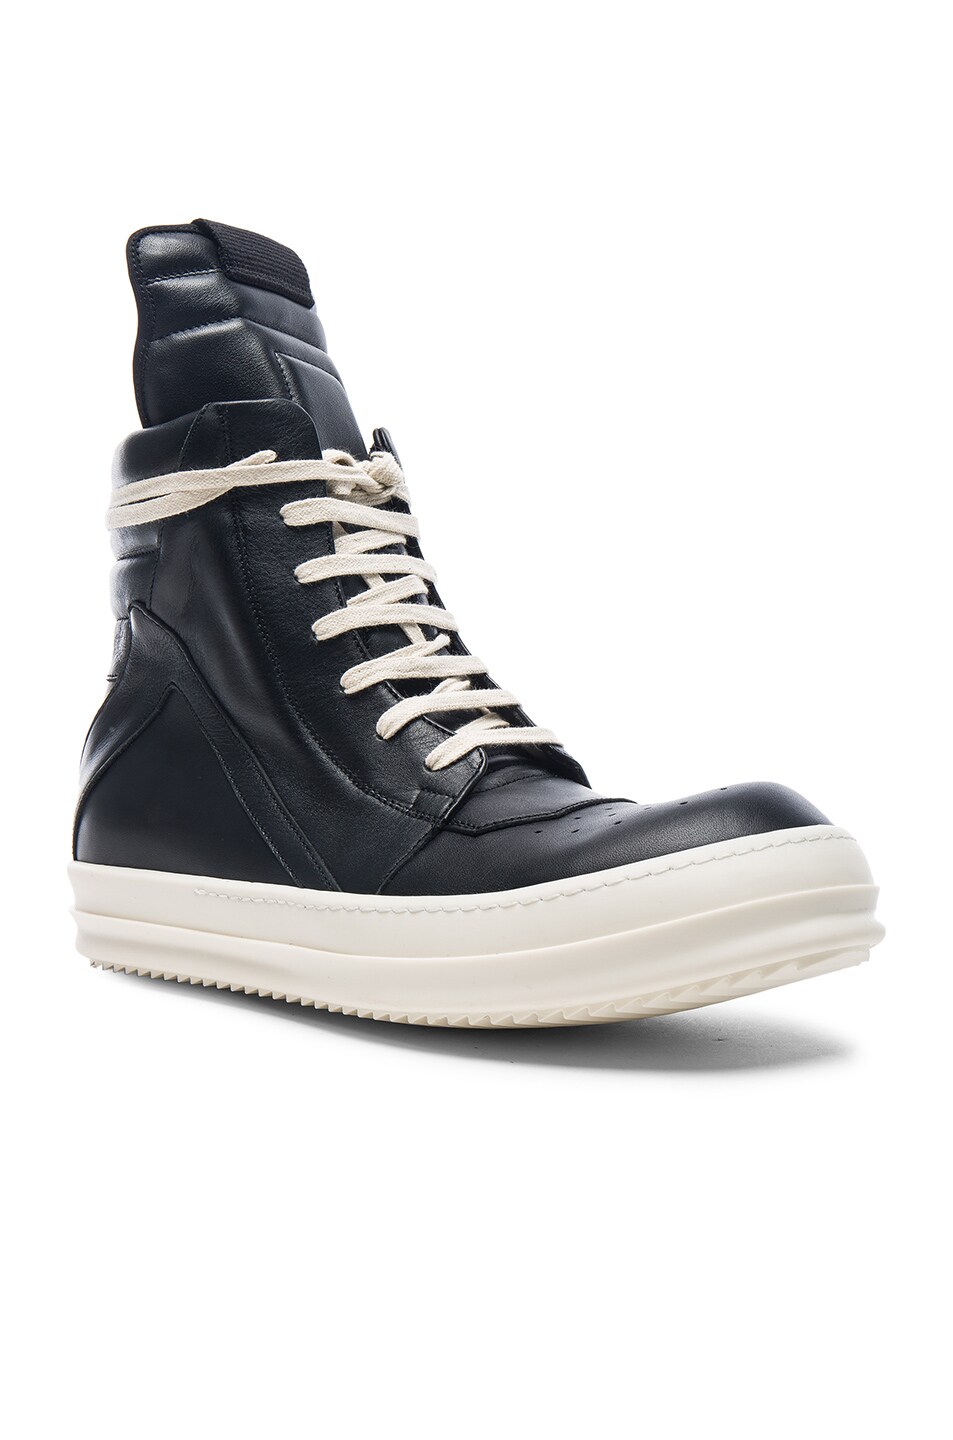 Image 1 of Rick Owens Leather Geobasket Sneakers in Black & White